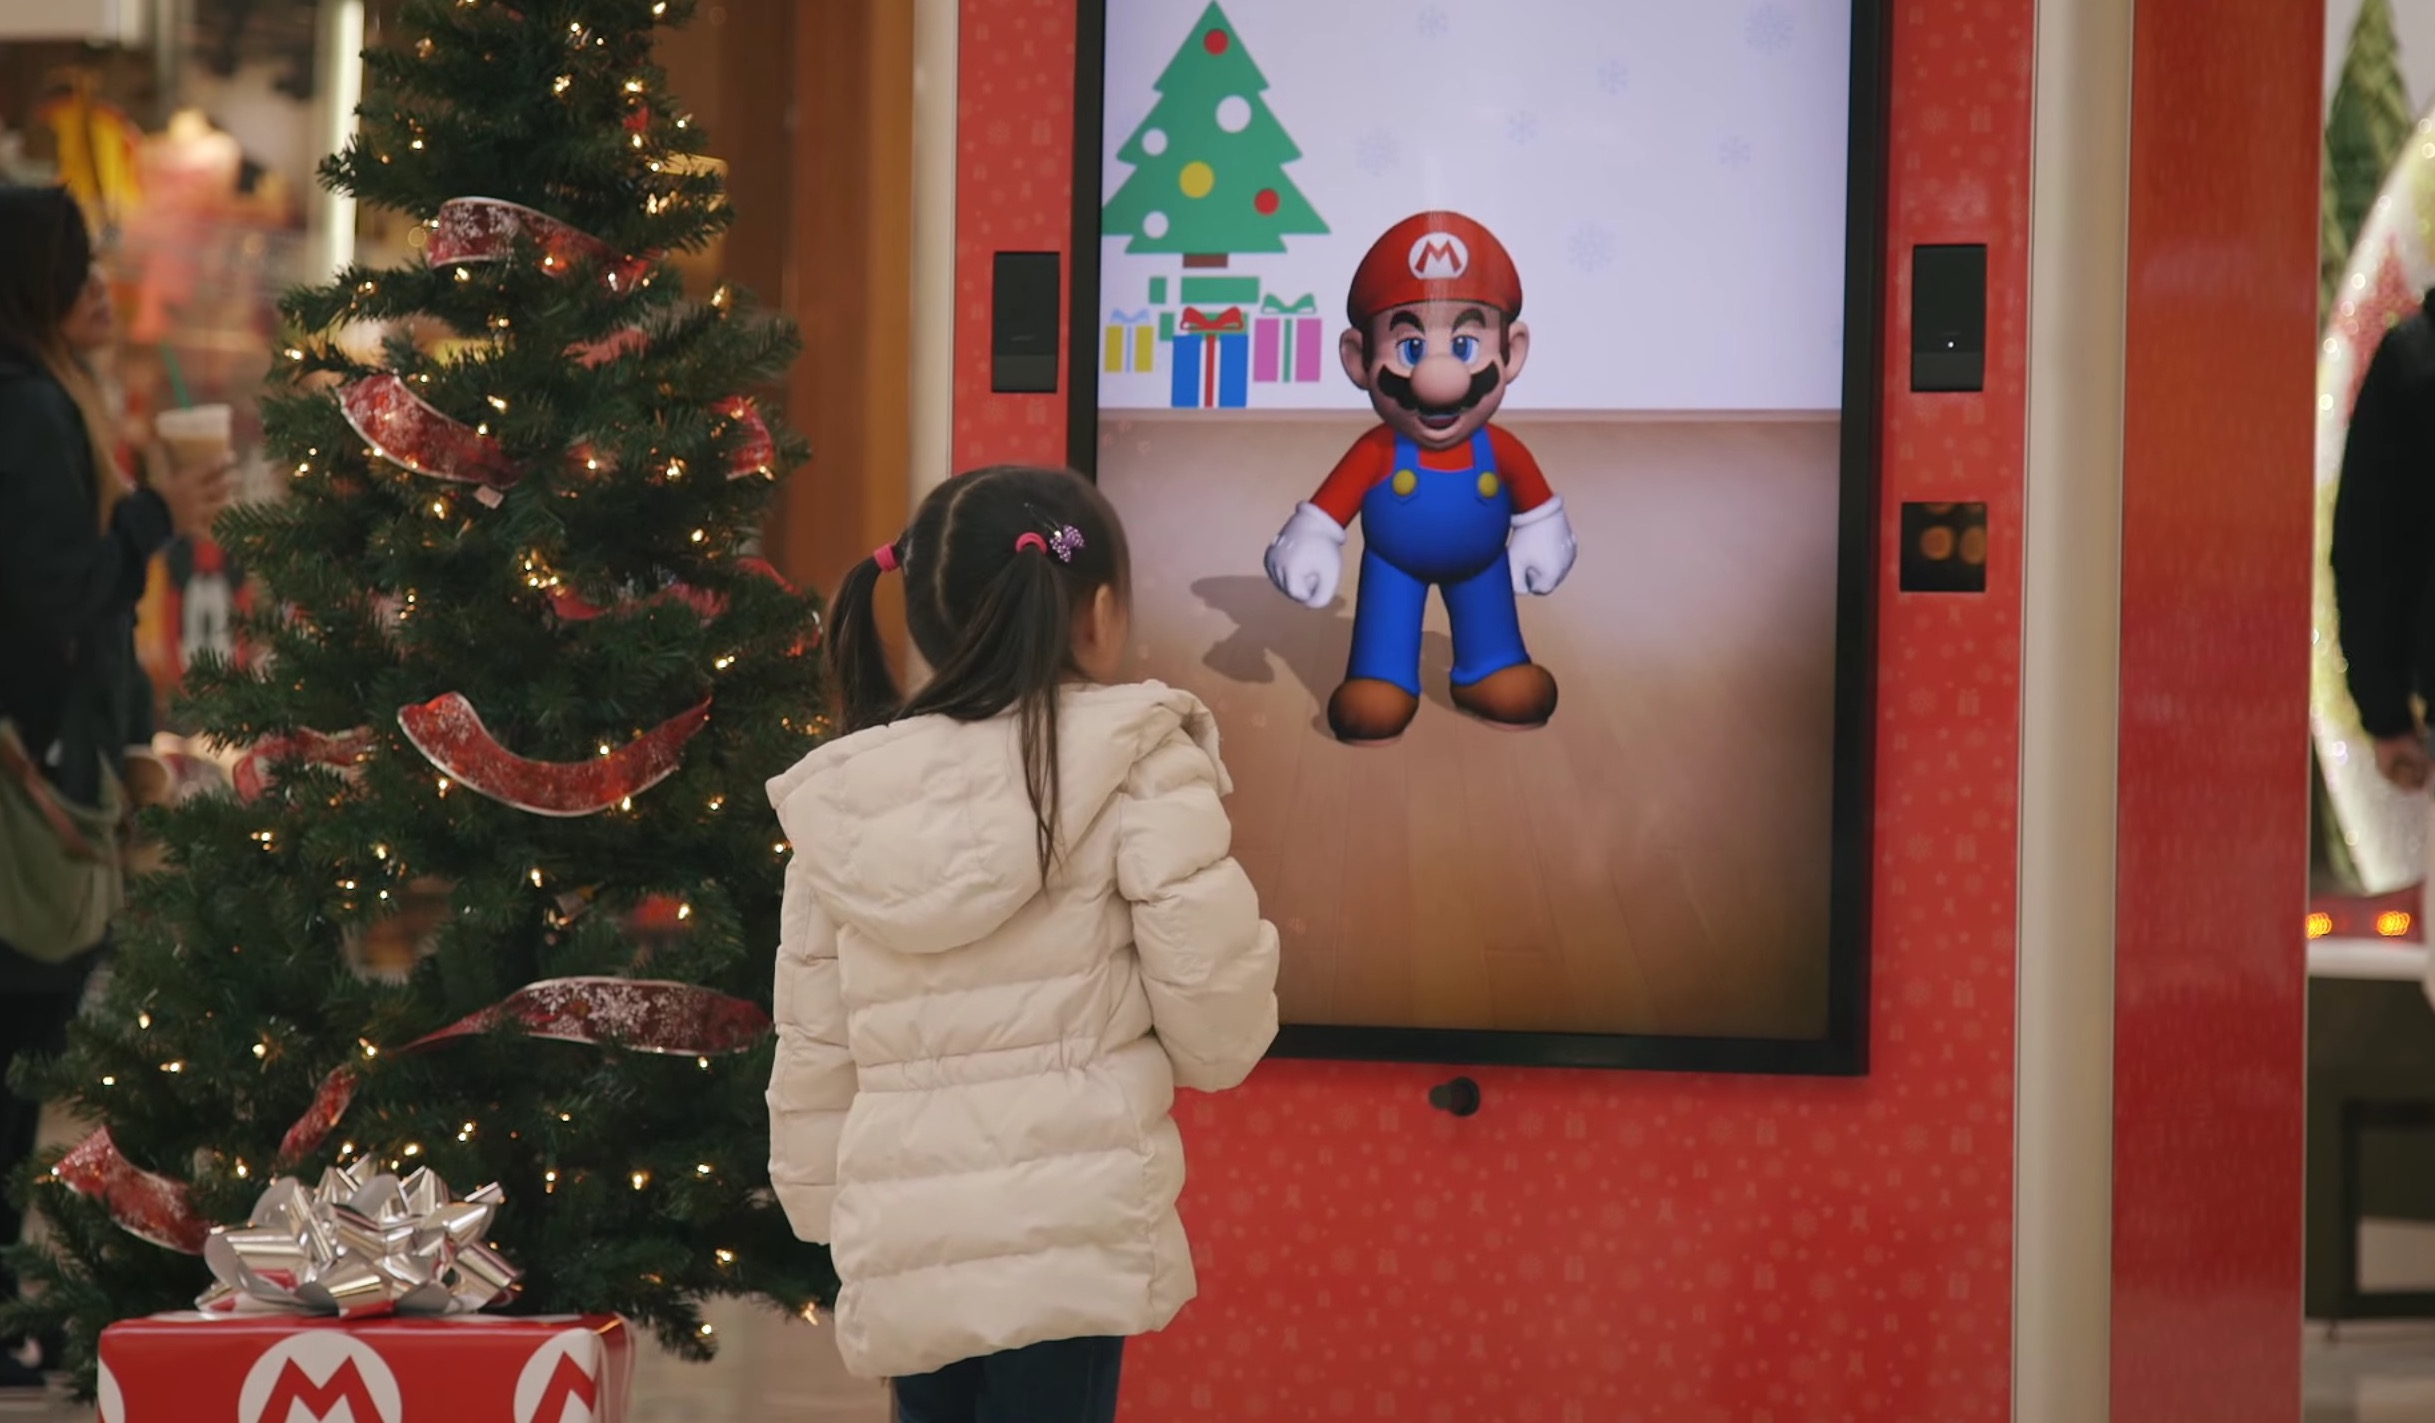 Natale in casa Nintendo, Mario diventa “Babbo Natale” in un centro commerciale - Video